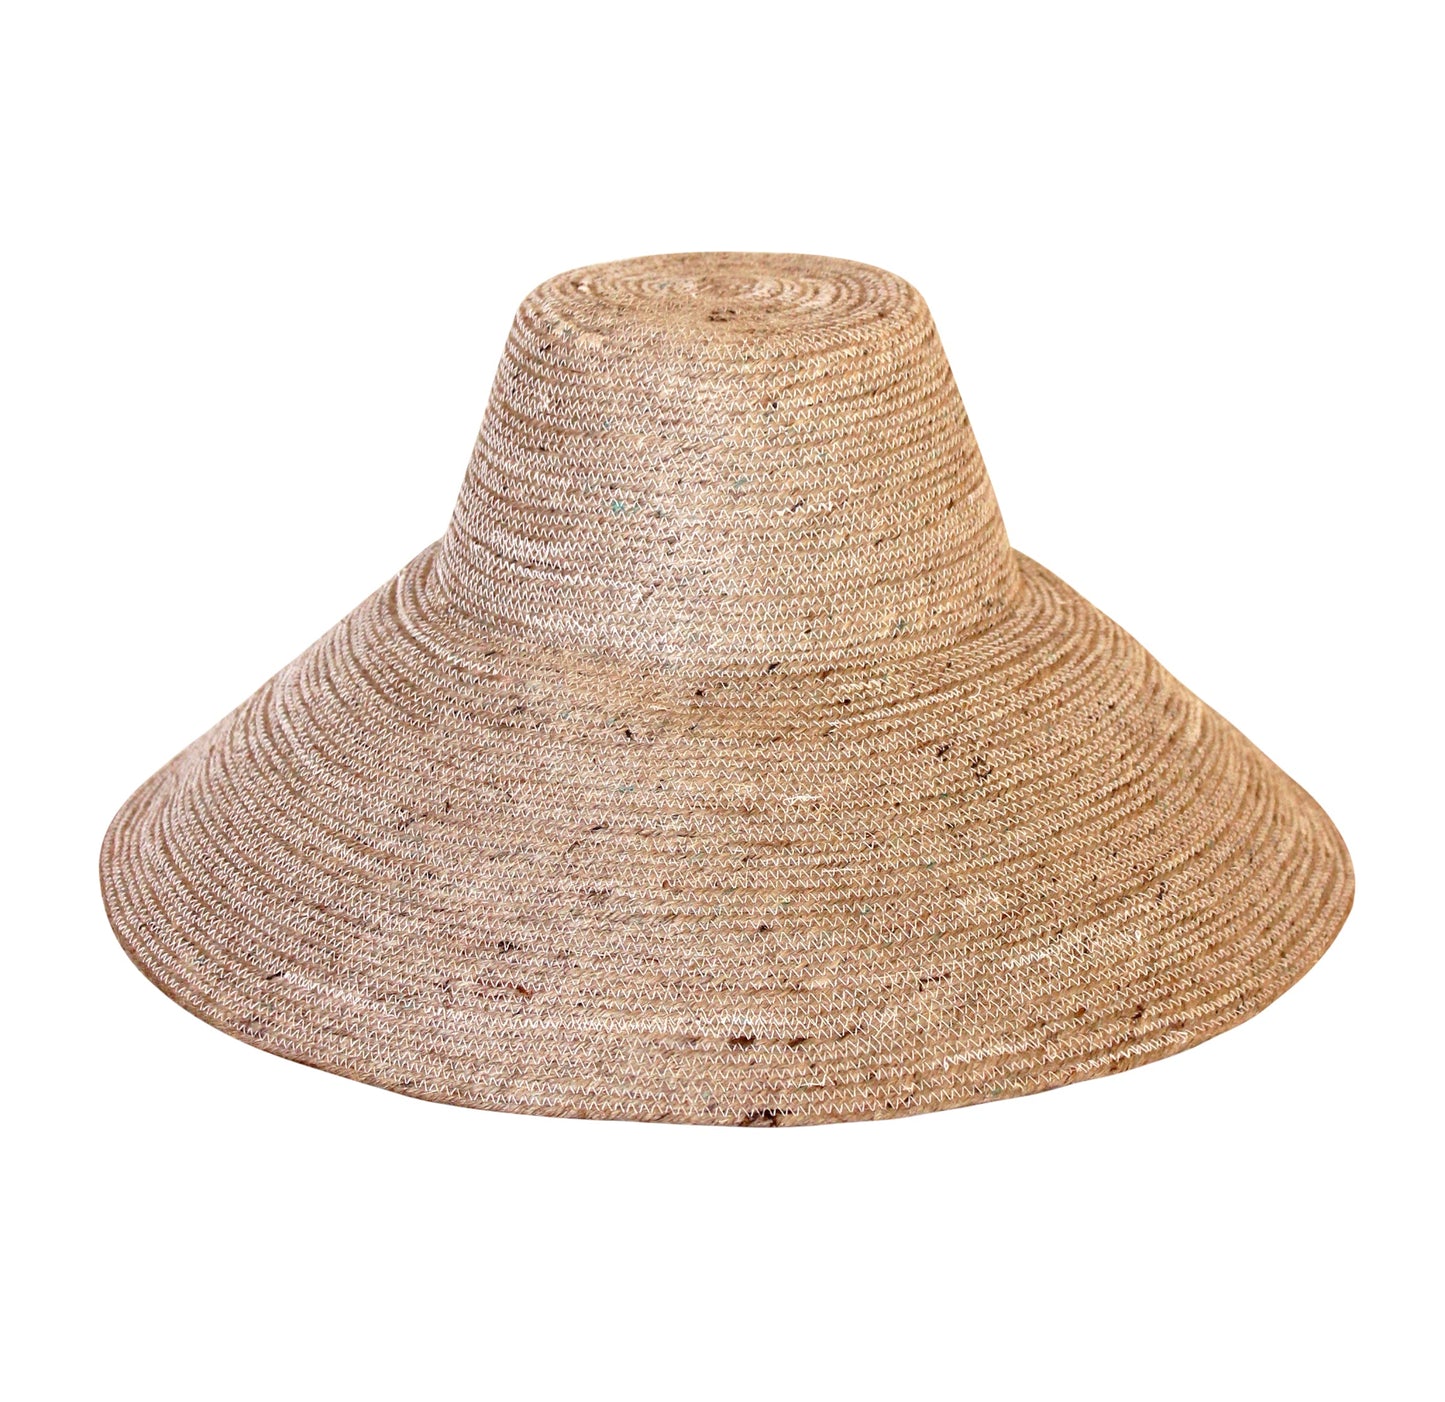 Jute Straw Hat, in Nude Beige by BrunnaCo